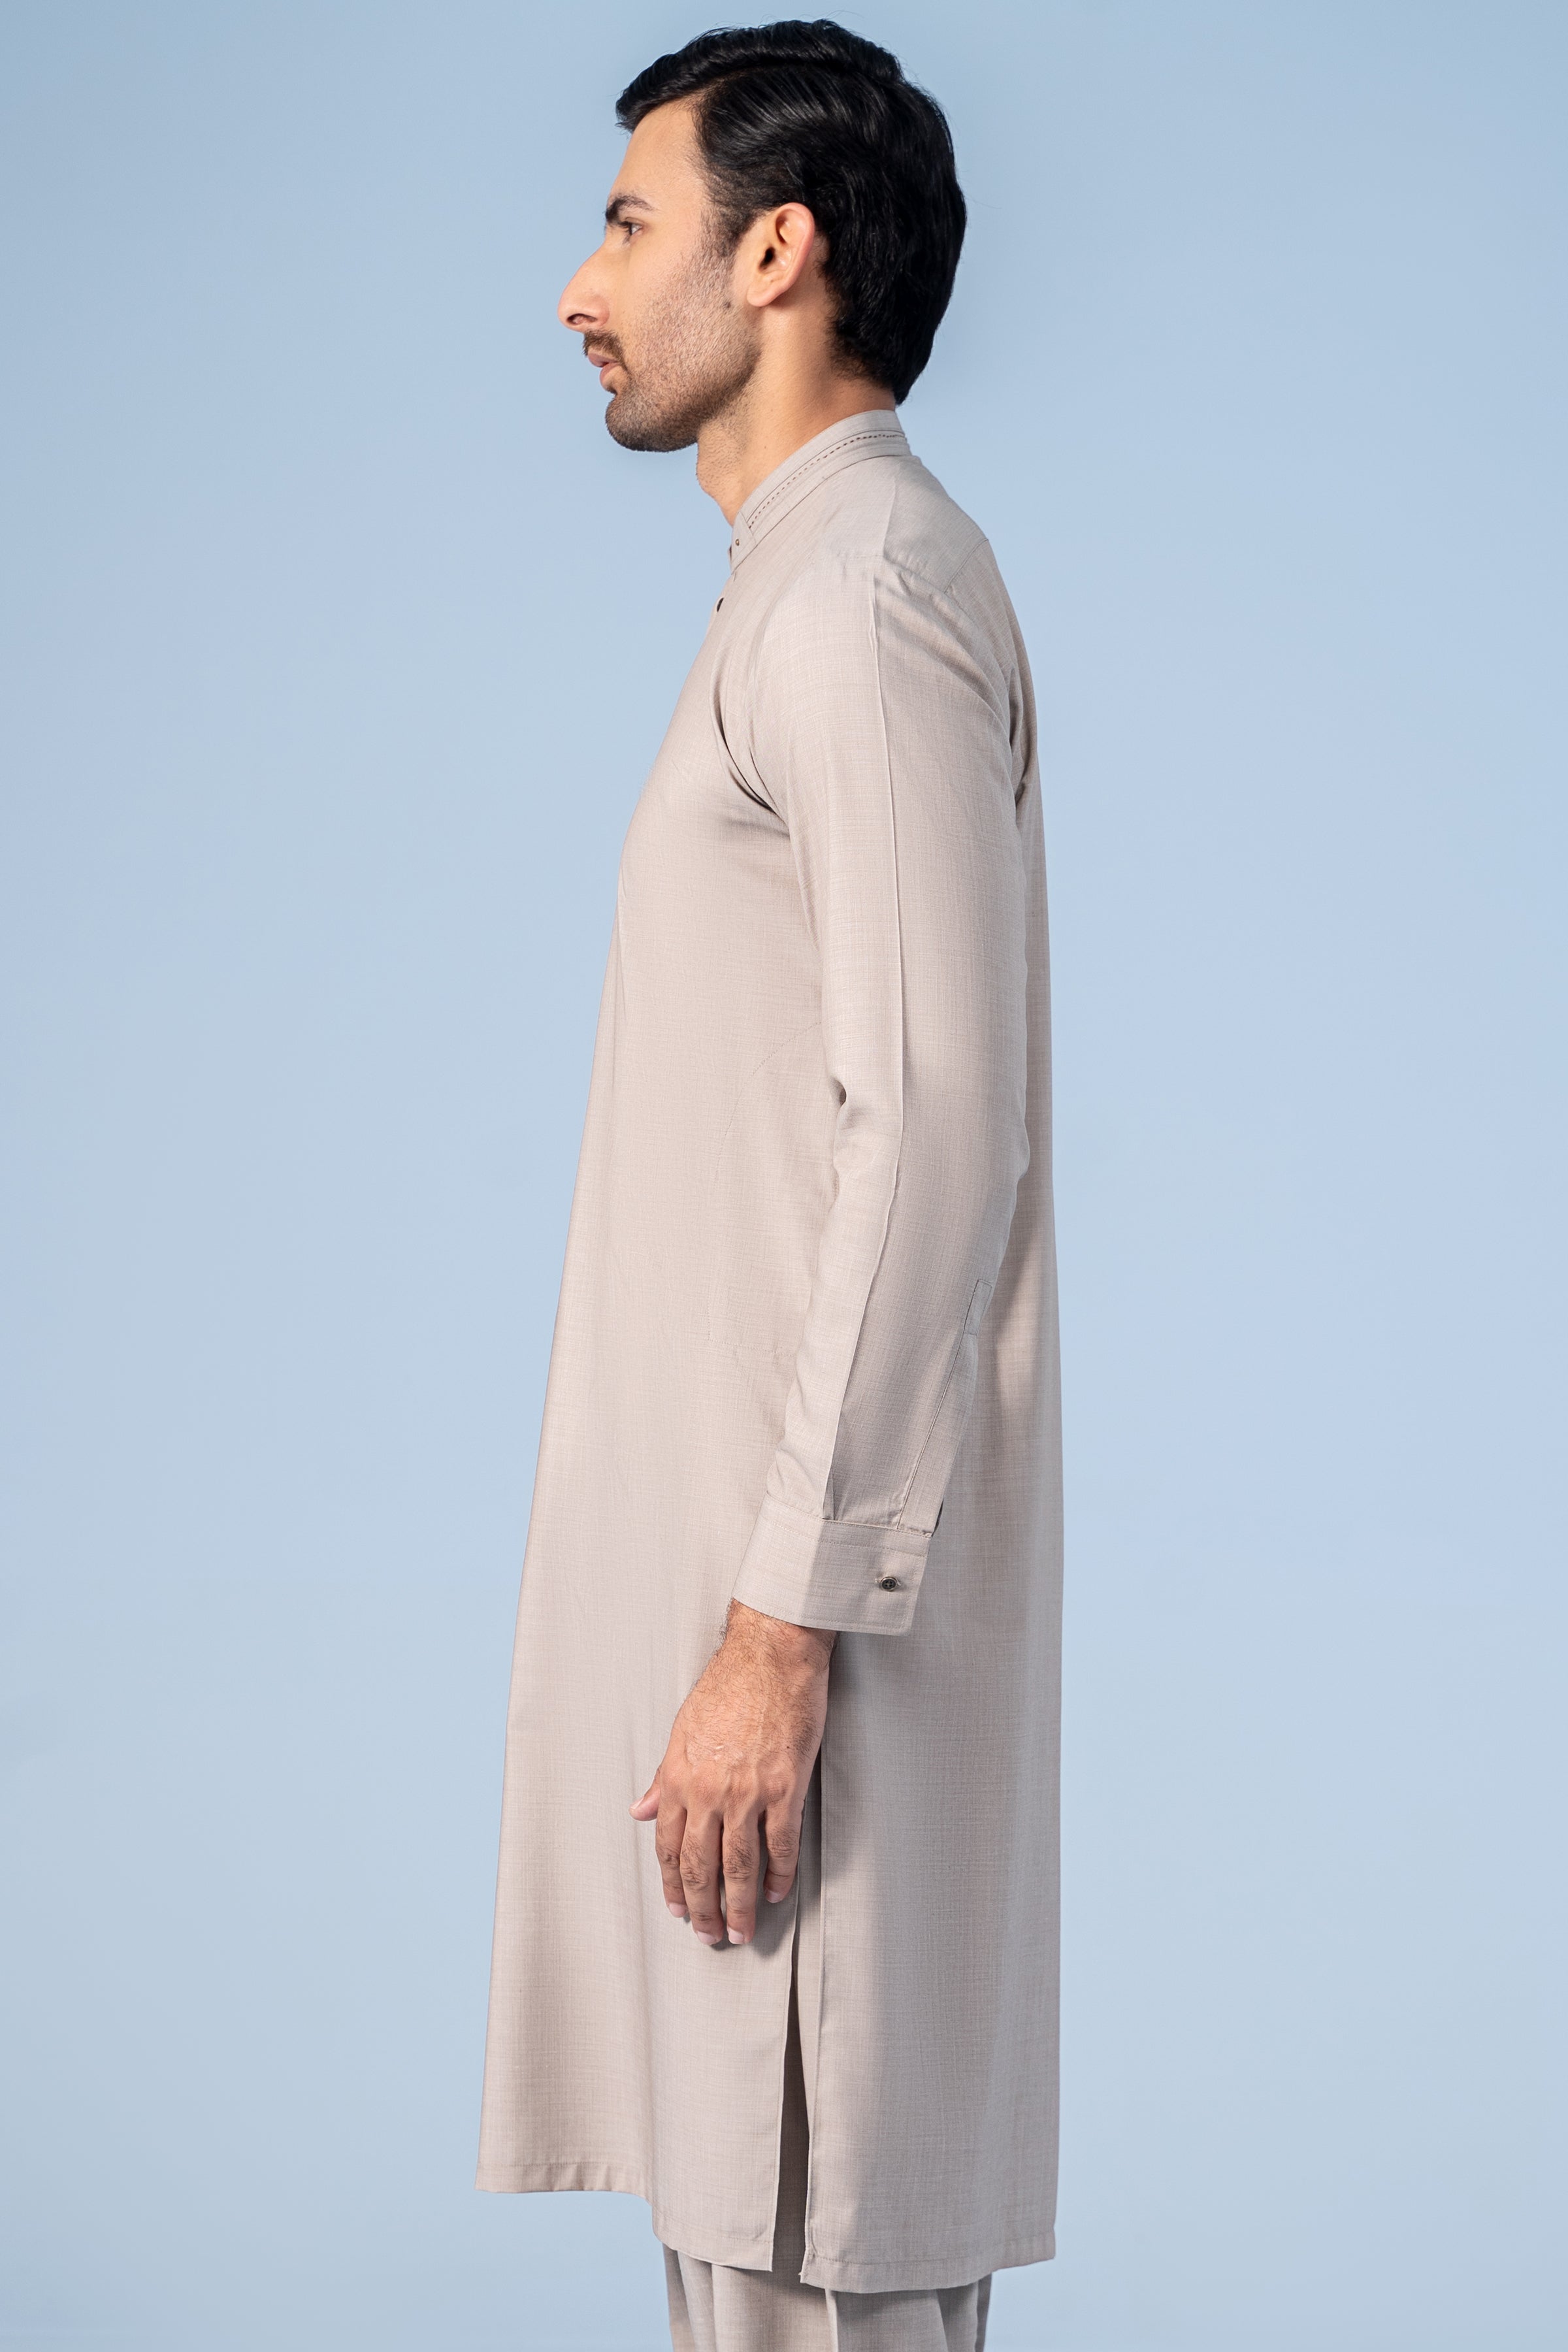 SHALWAR KAMEEZ KHAKI - Charcoal Clothing